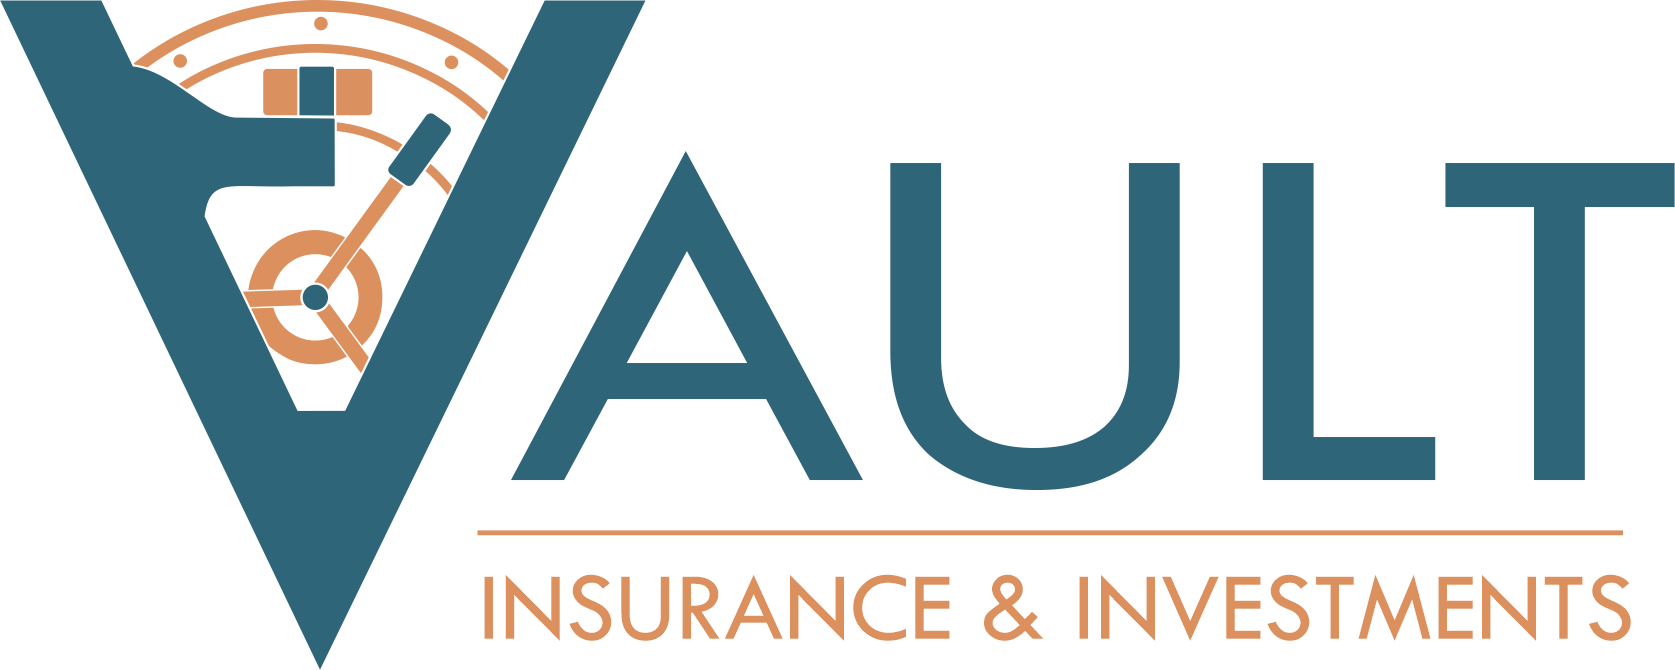 Vault Insurance & Investments logo